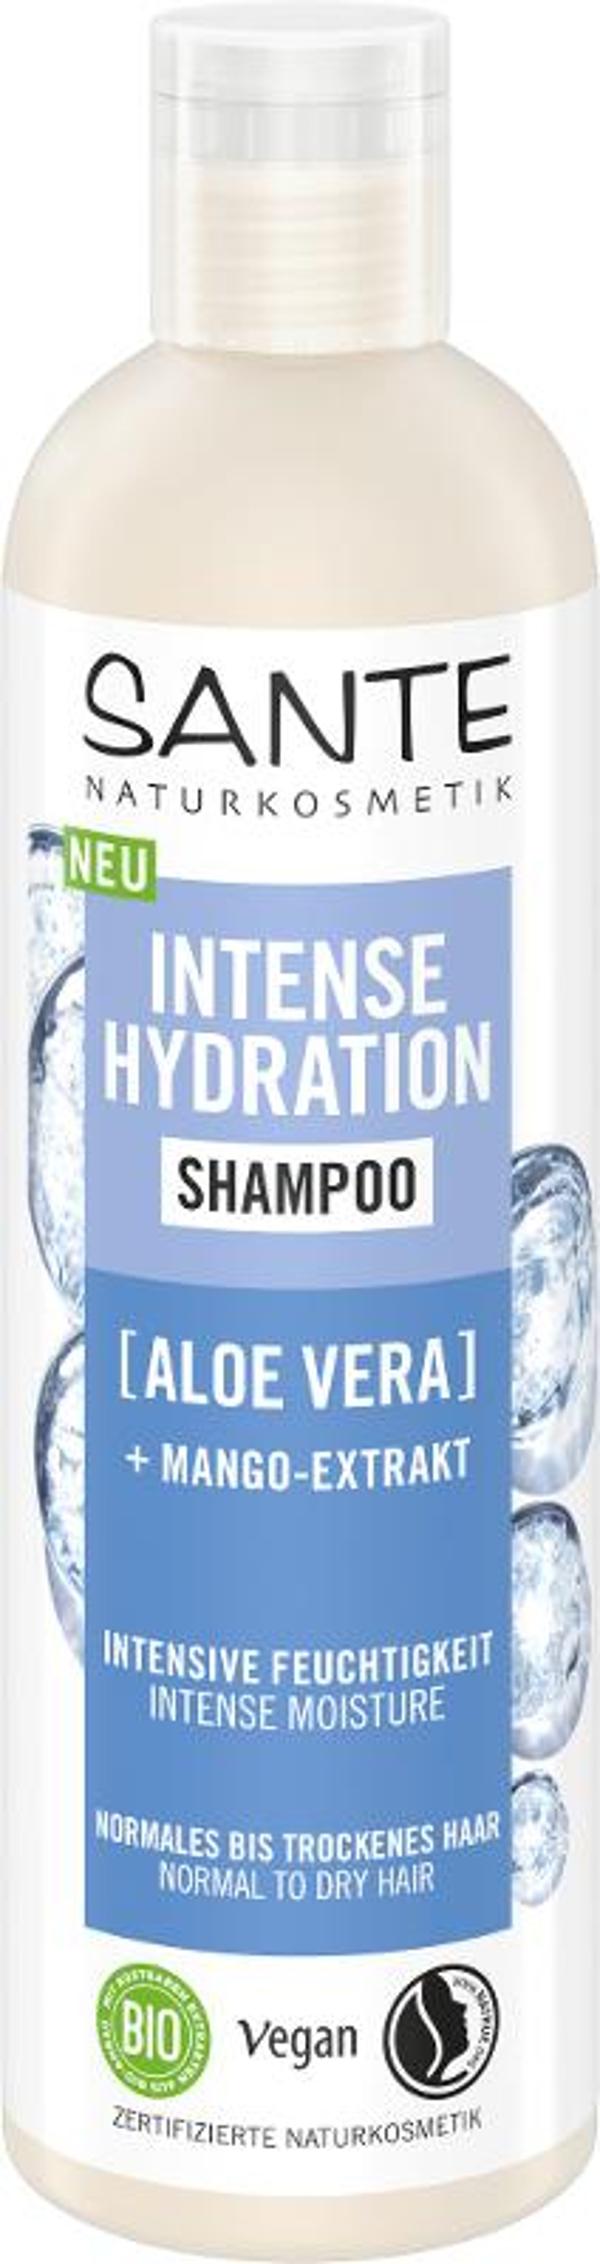 Produktfoto zu Intense Hydration Shampoo Hyaluron 250ml Sante